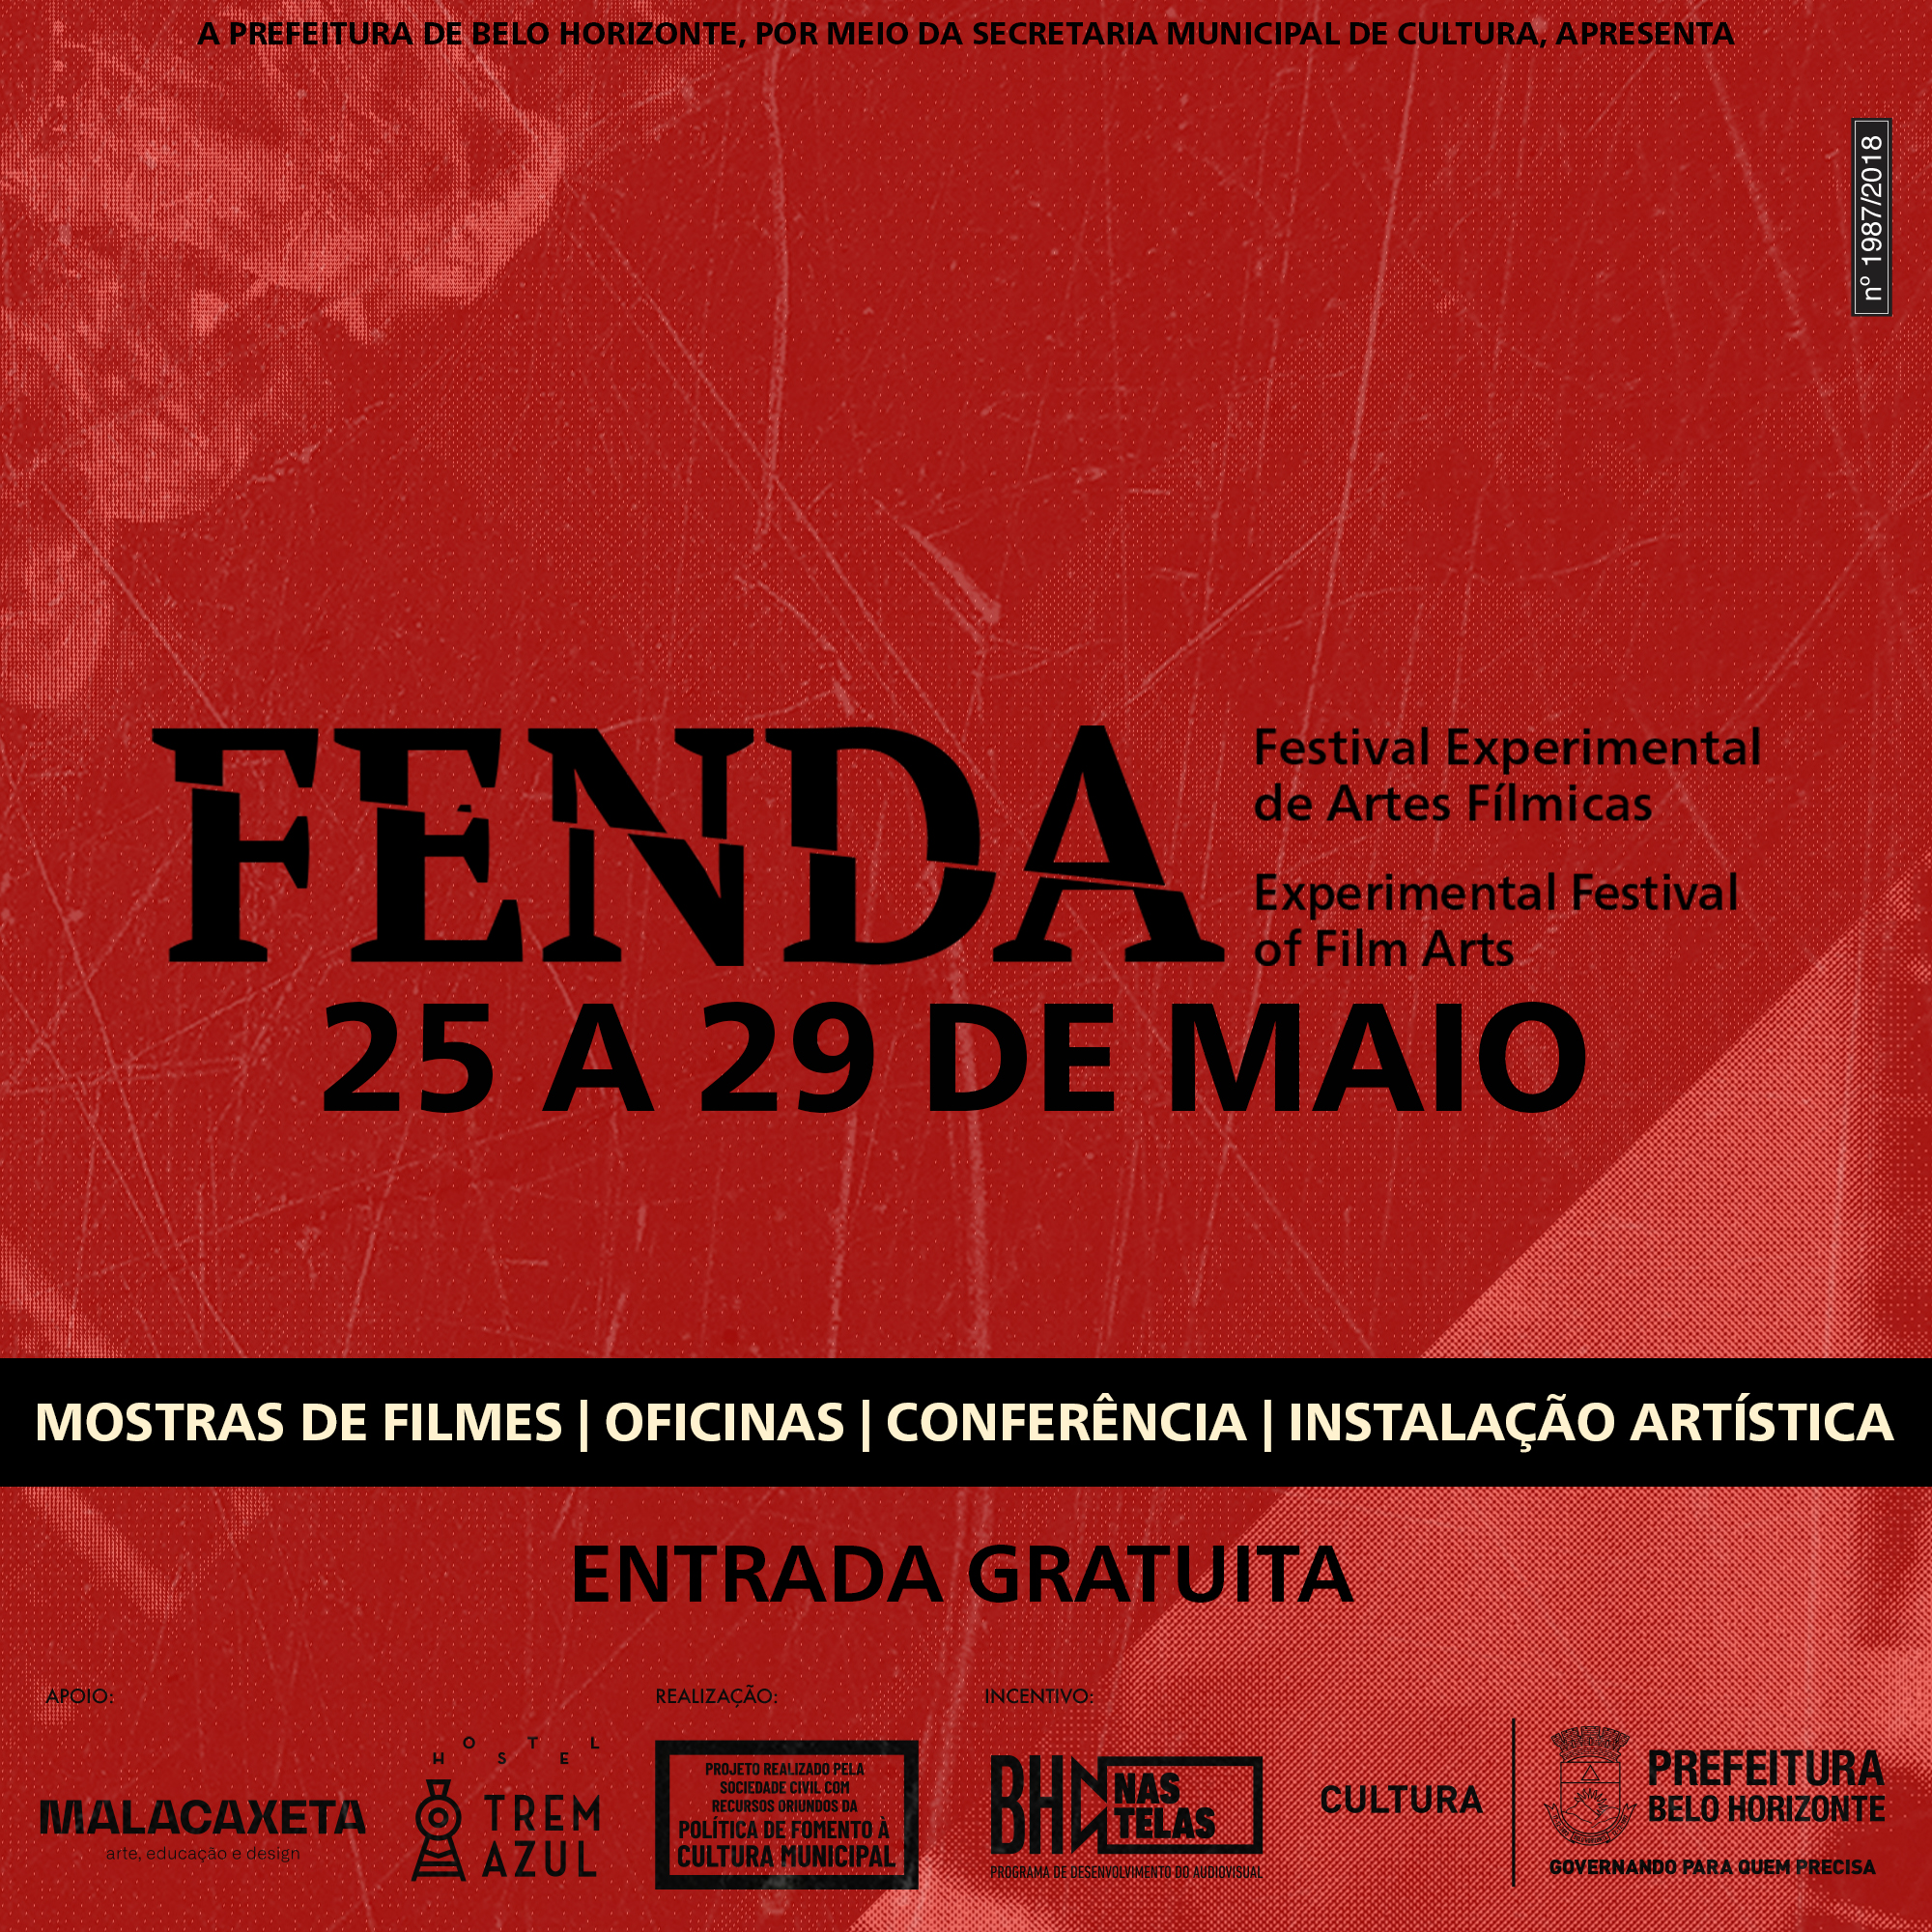 FENDA – Festival Experimental de Artes Fílmicas